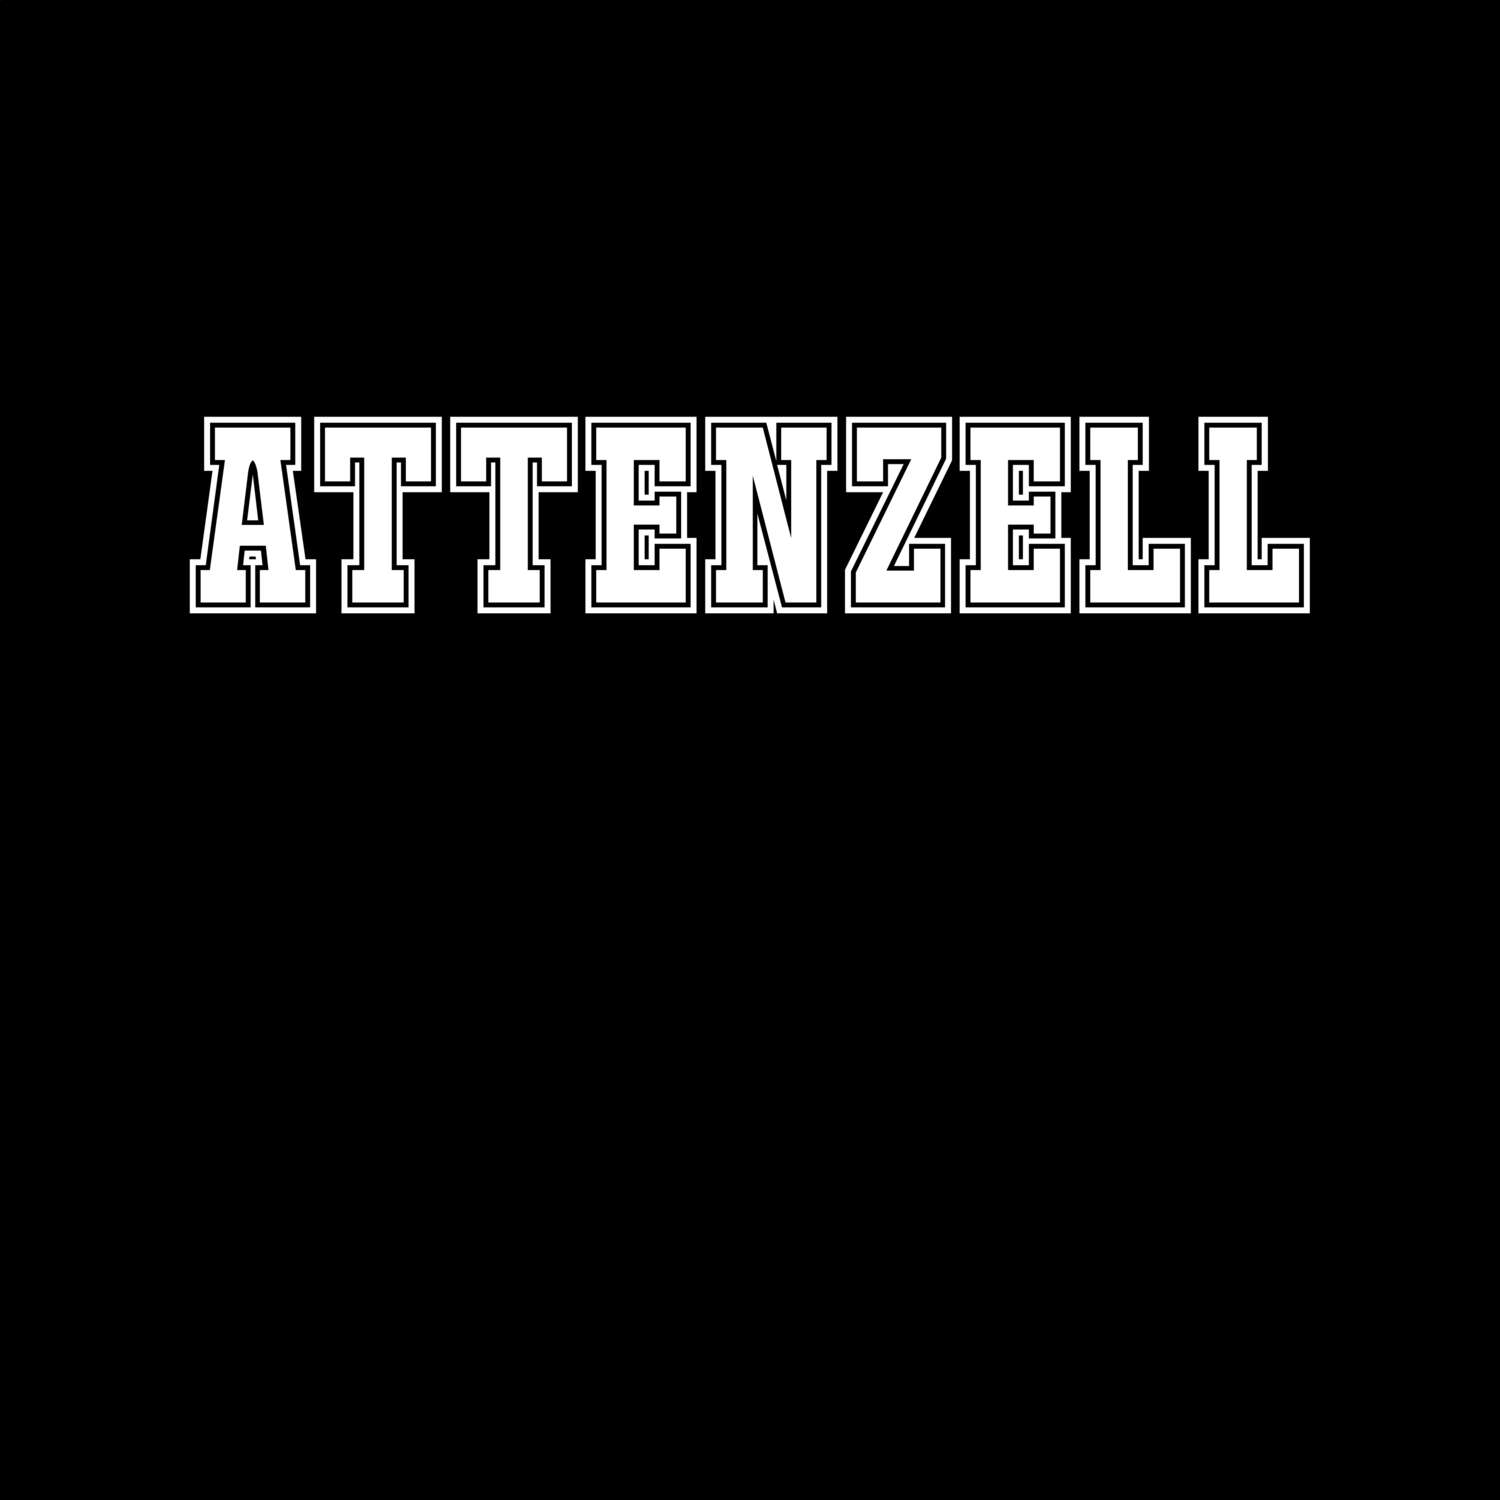 Attenzell T-Shirt »Classic«